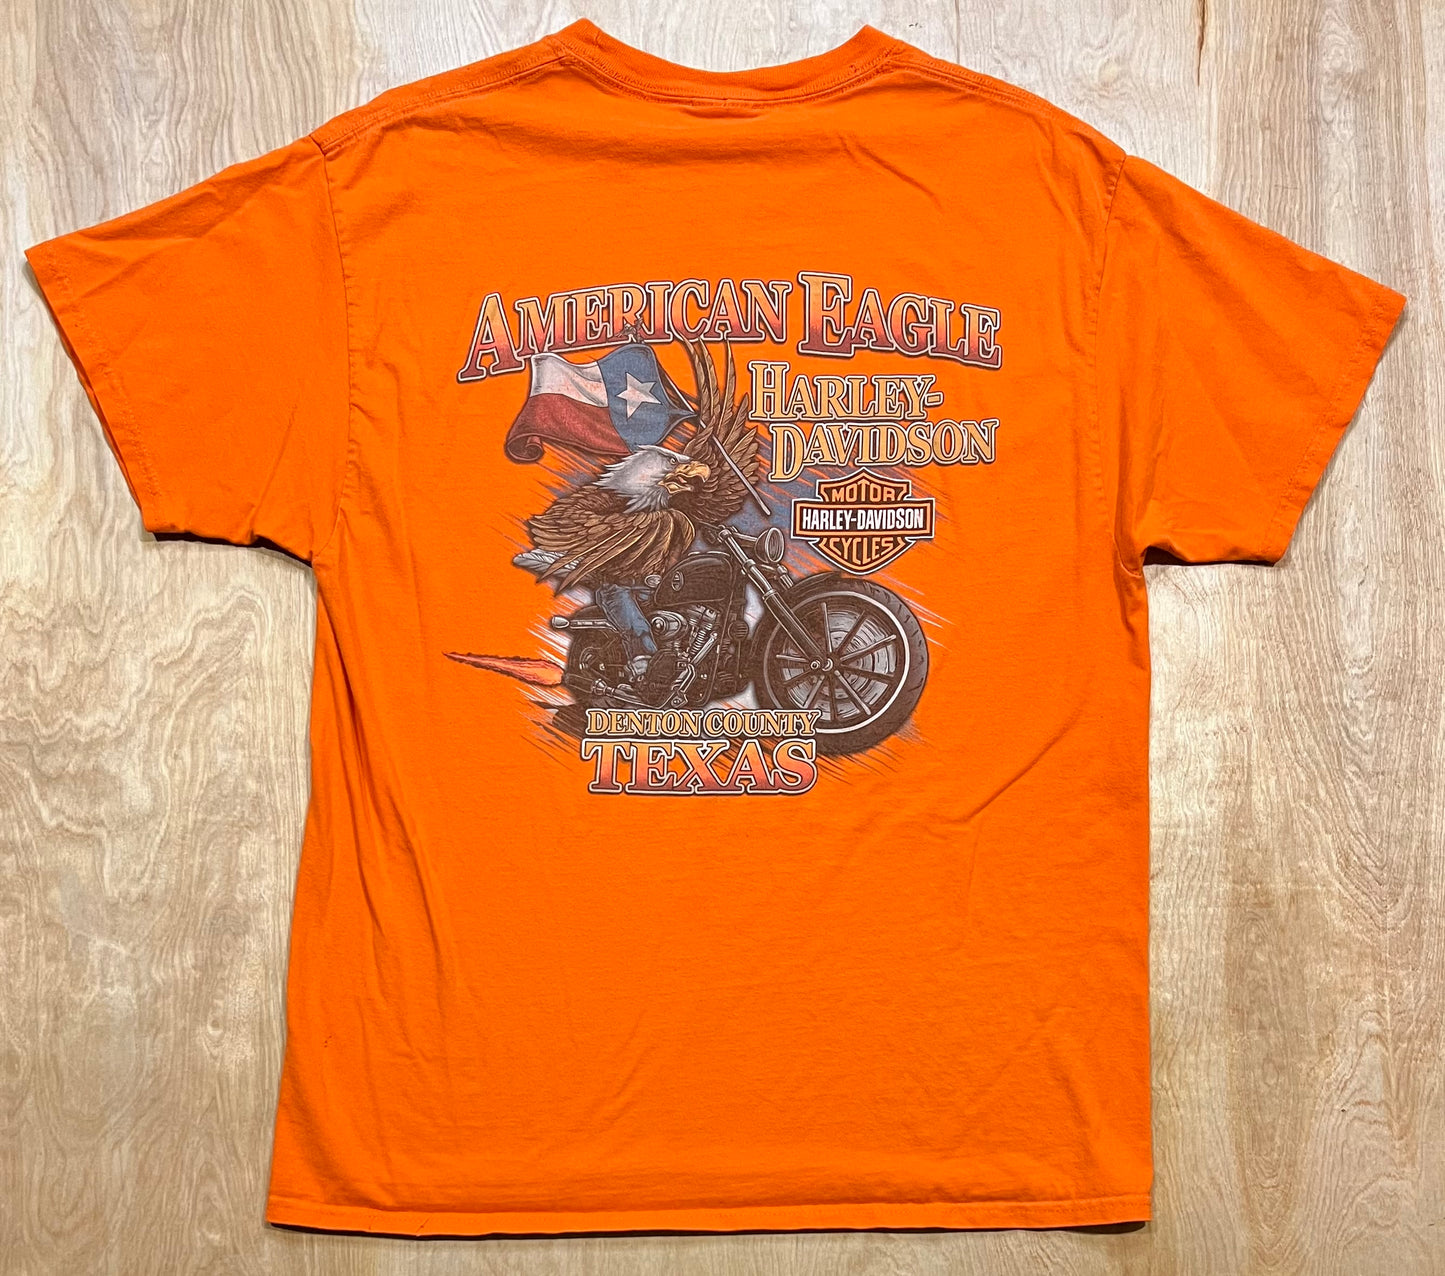 Harley Davidson "Smoke 'em 'till the wheels fall off" American Eagle T-Shirt